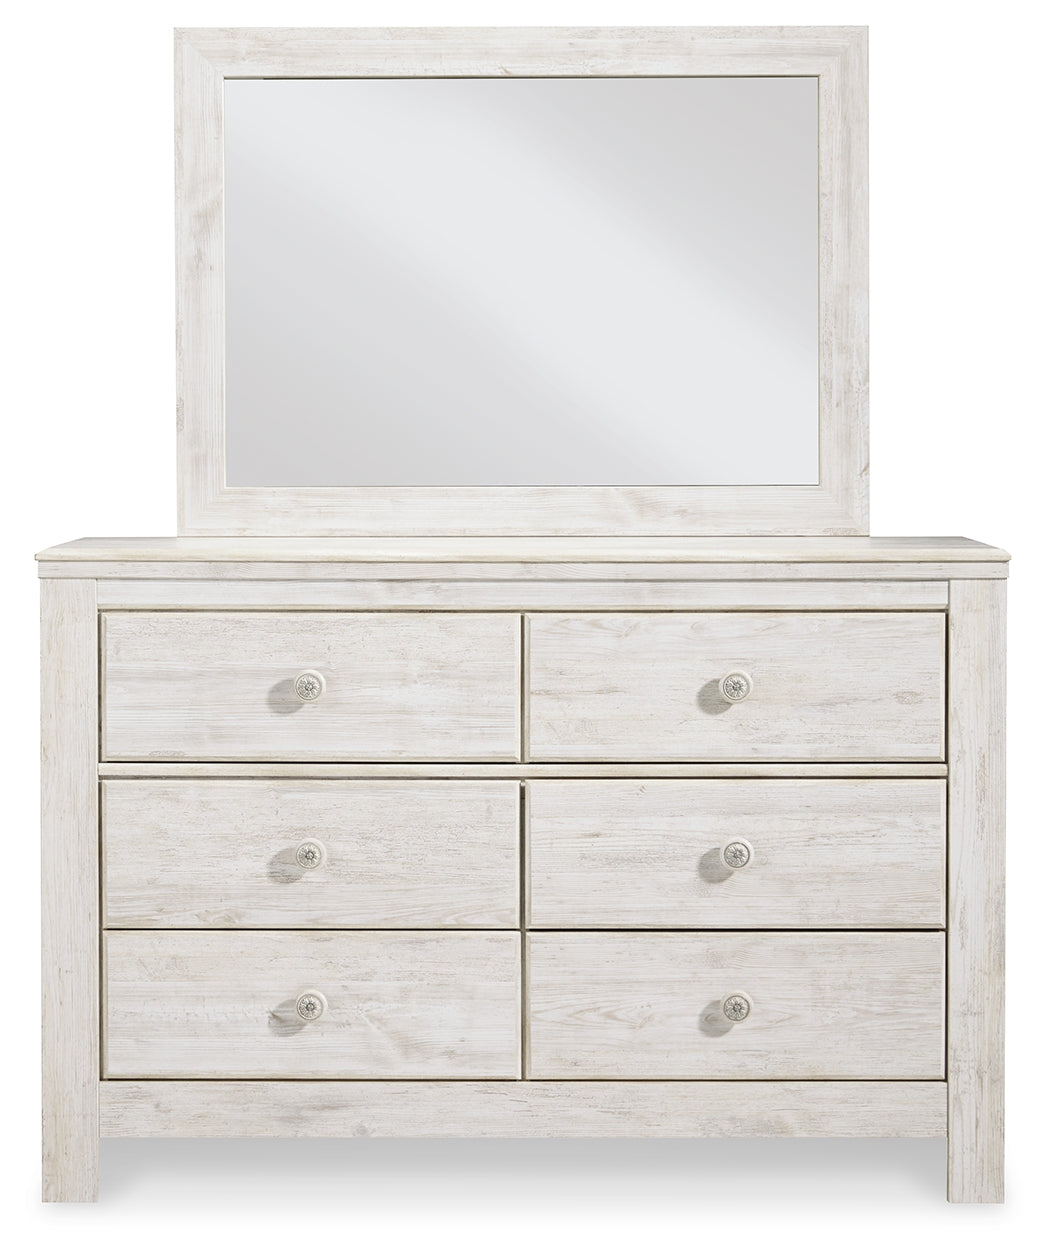 Paxberry Whitewash Dresser And Mirror